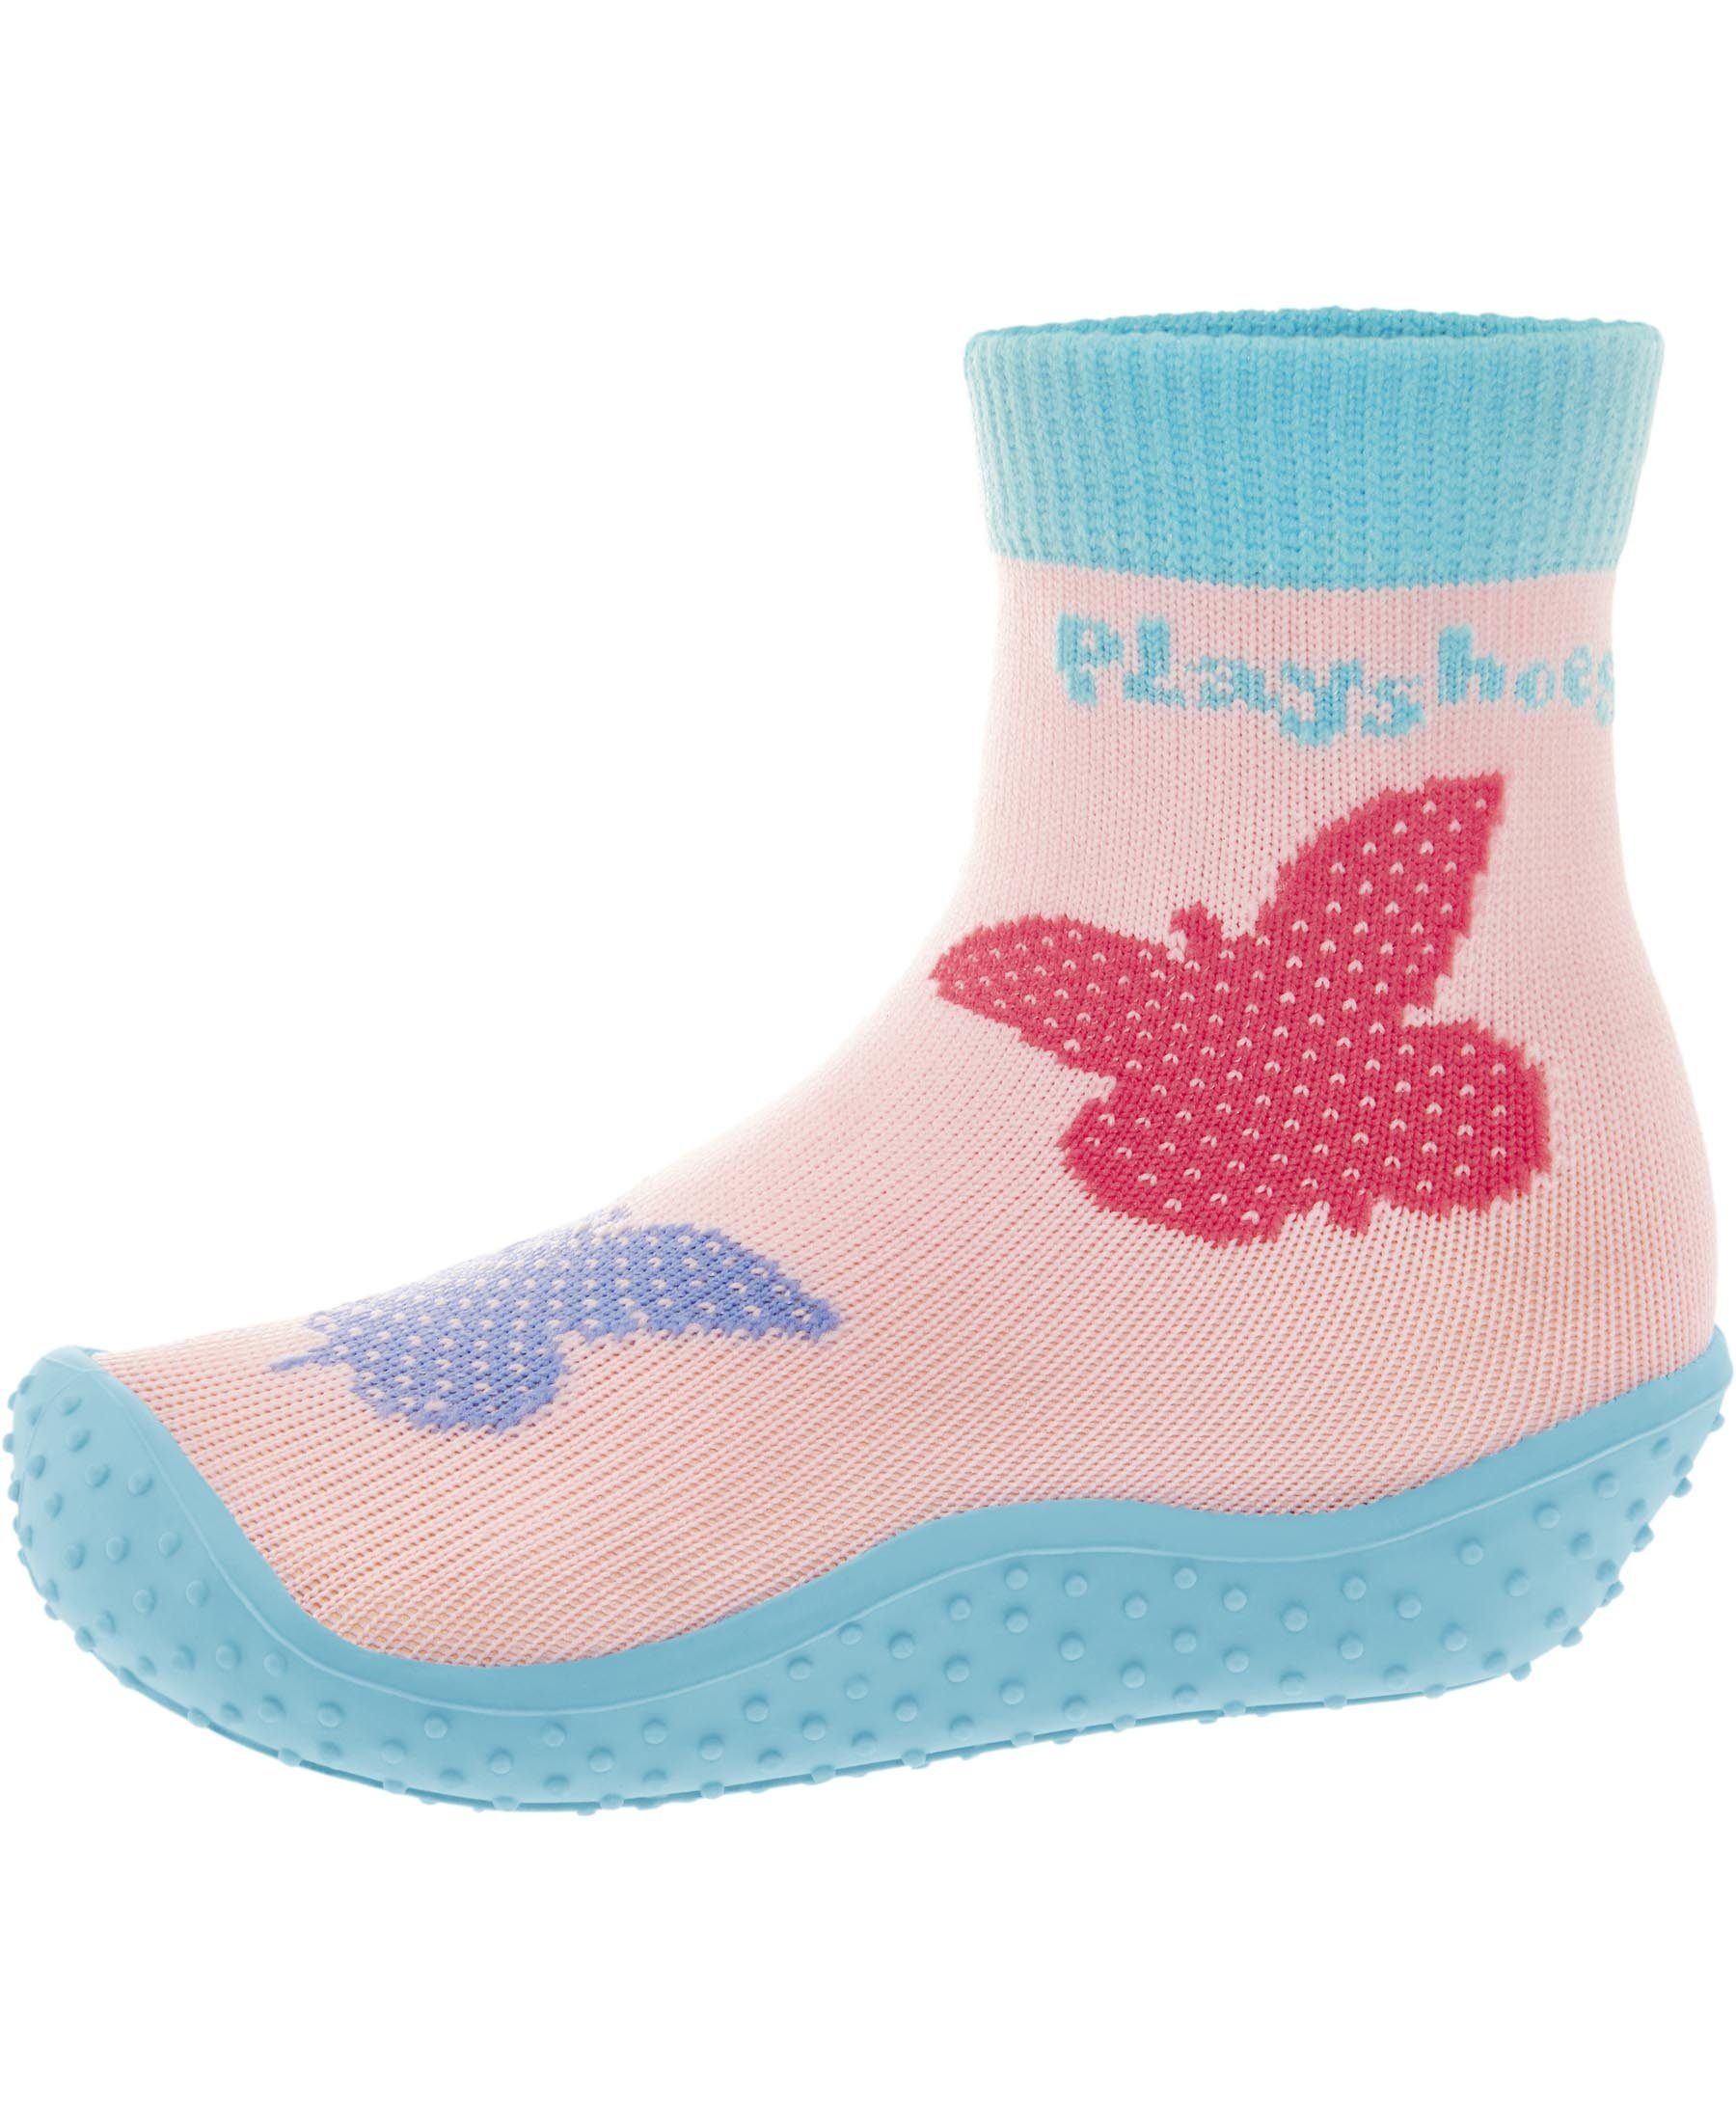 Schmetterlinge Aqua-Socke Playshoes Badeschuh